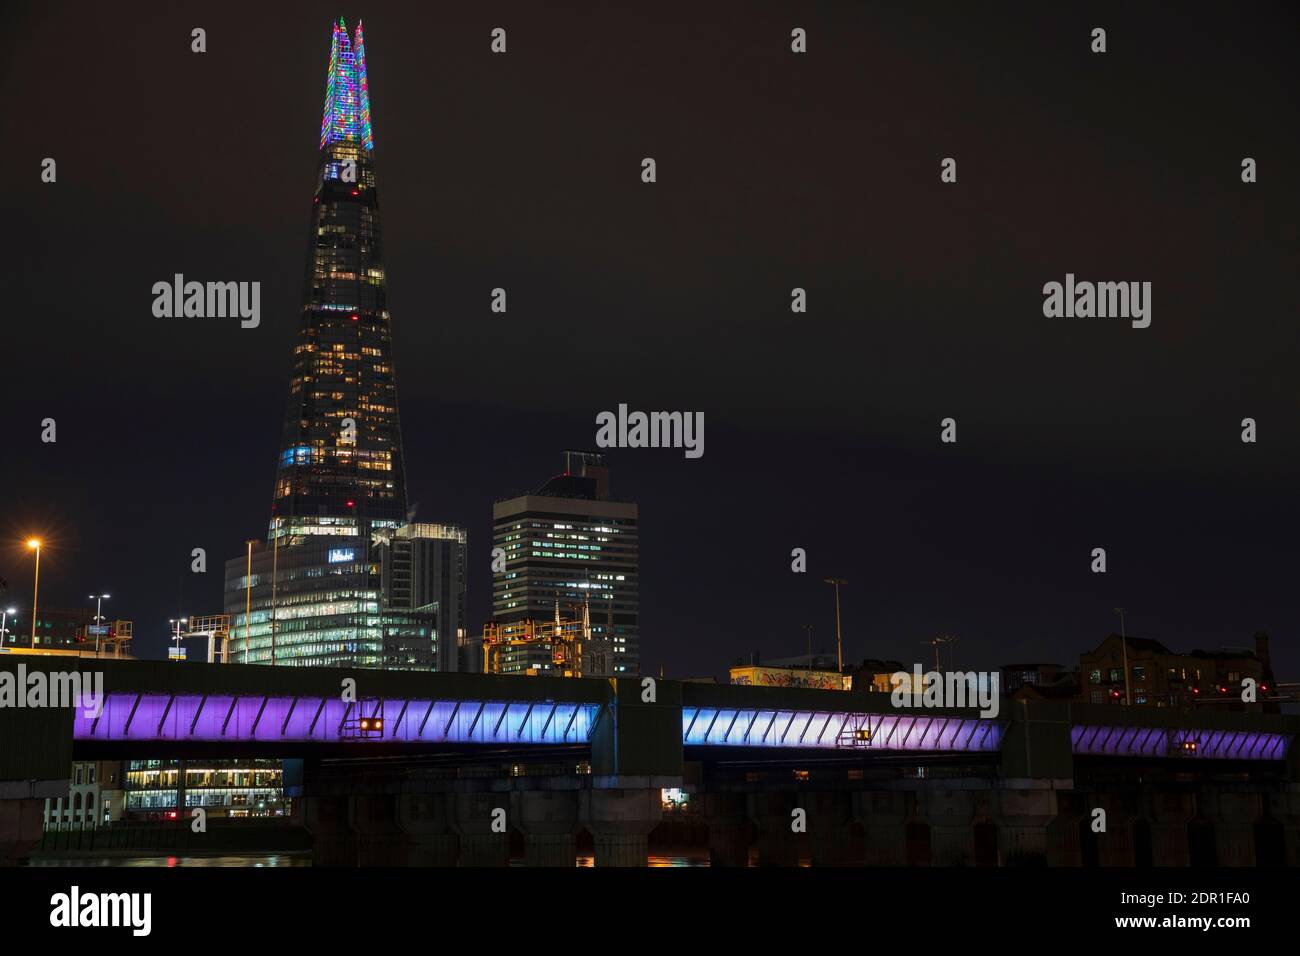 Exposition Shard Lights 2020 et Canon Street Railway Bridge, Londres, Angleterre. Banque D'Images